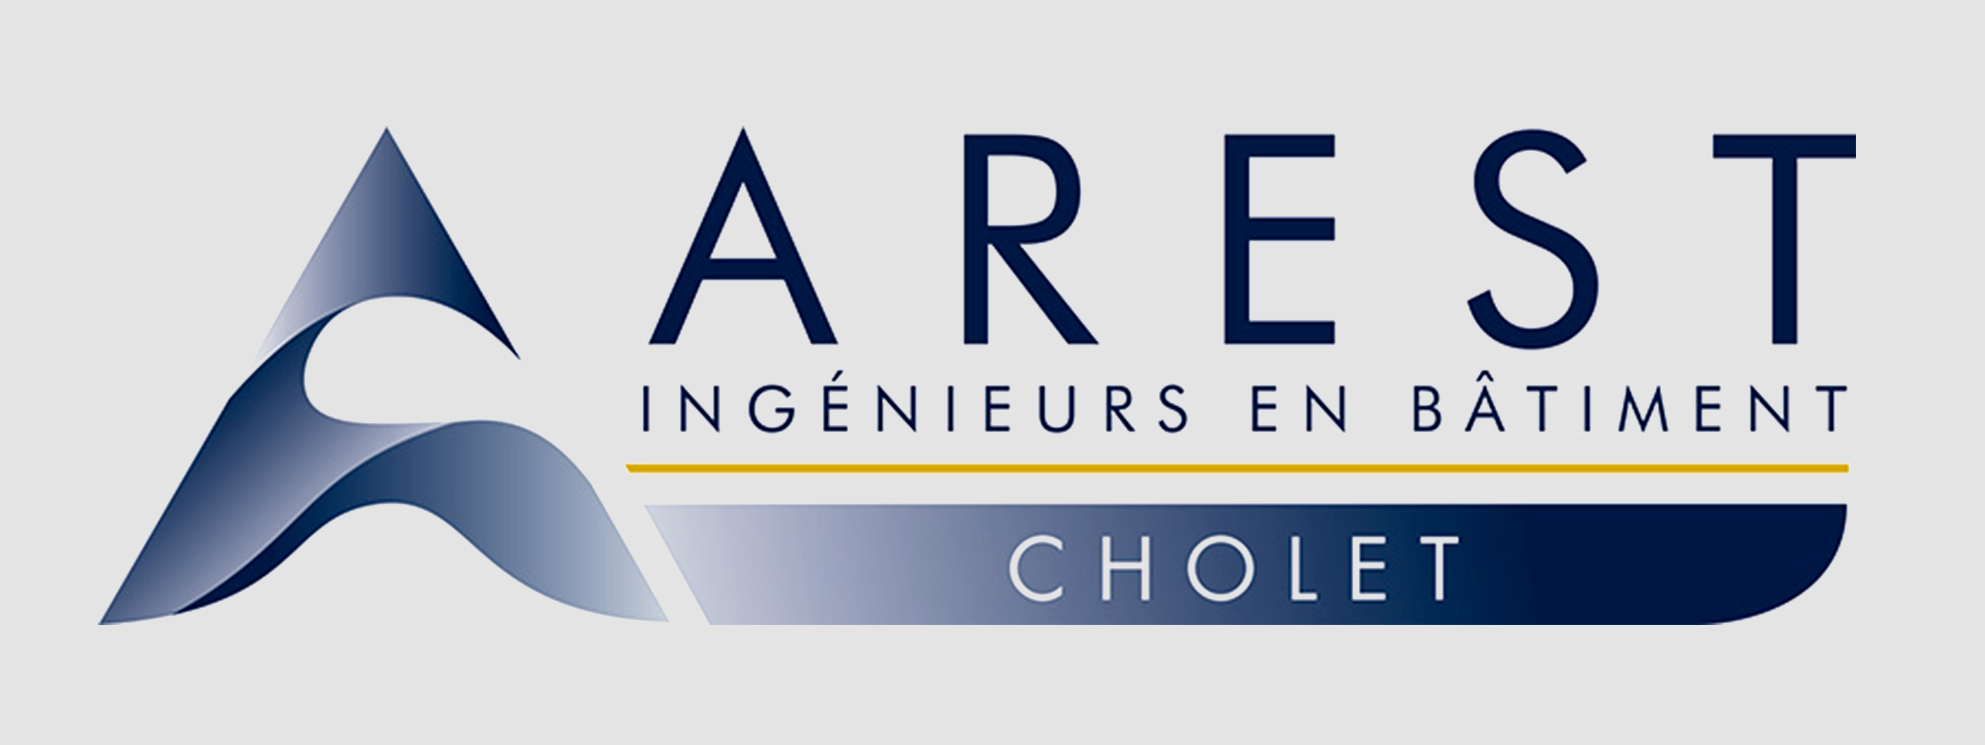 AREST Cholet logo 2